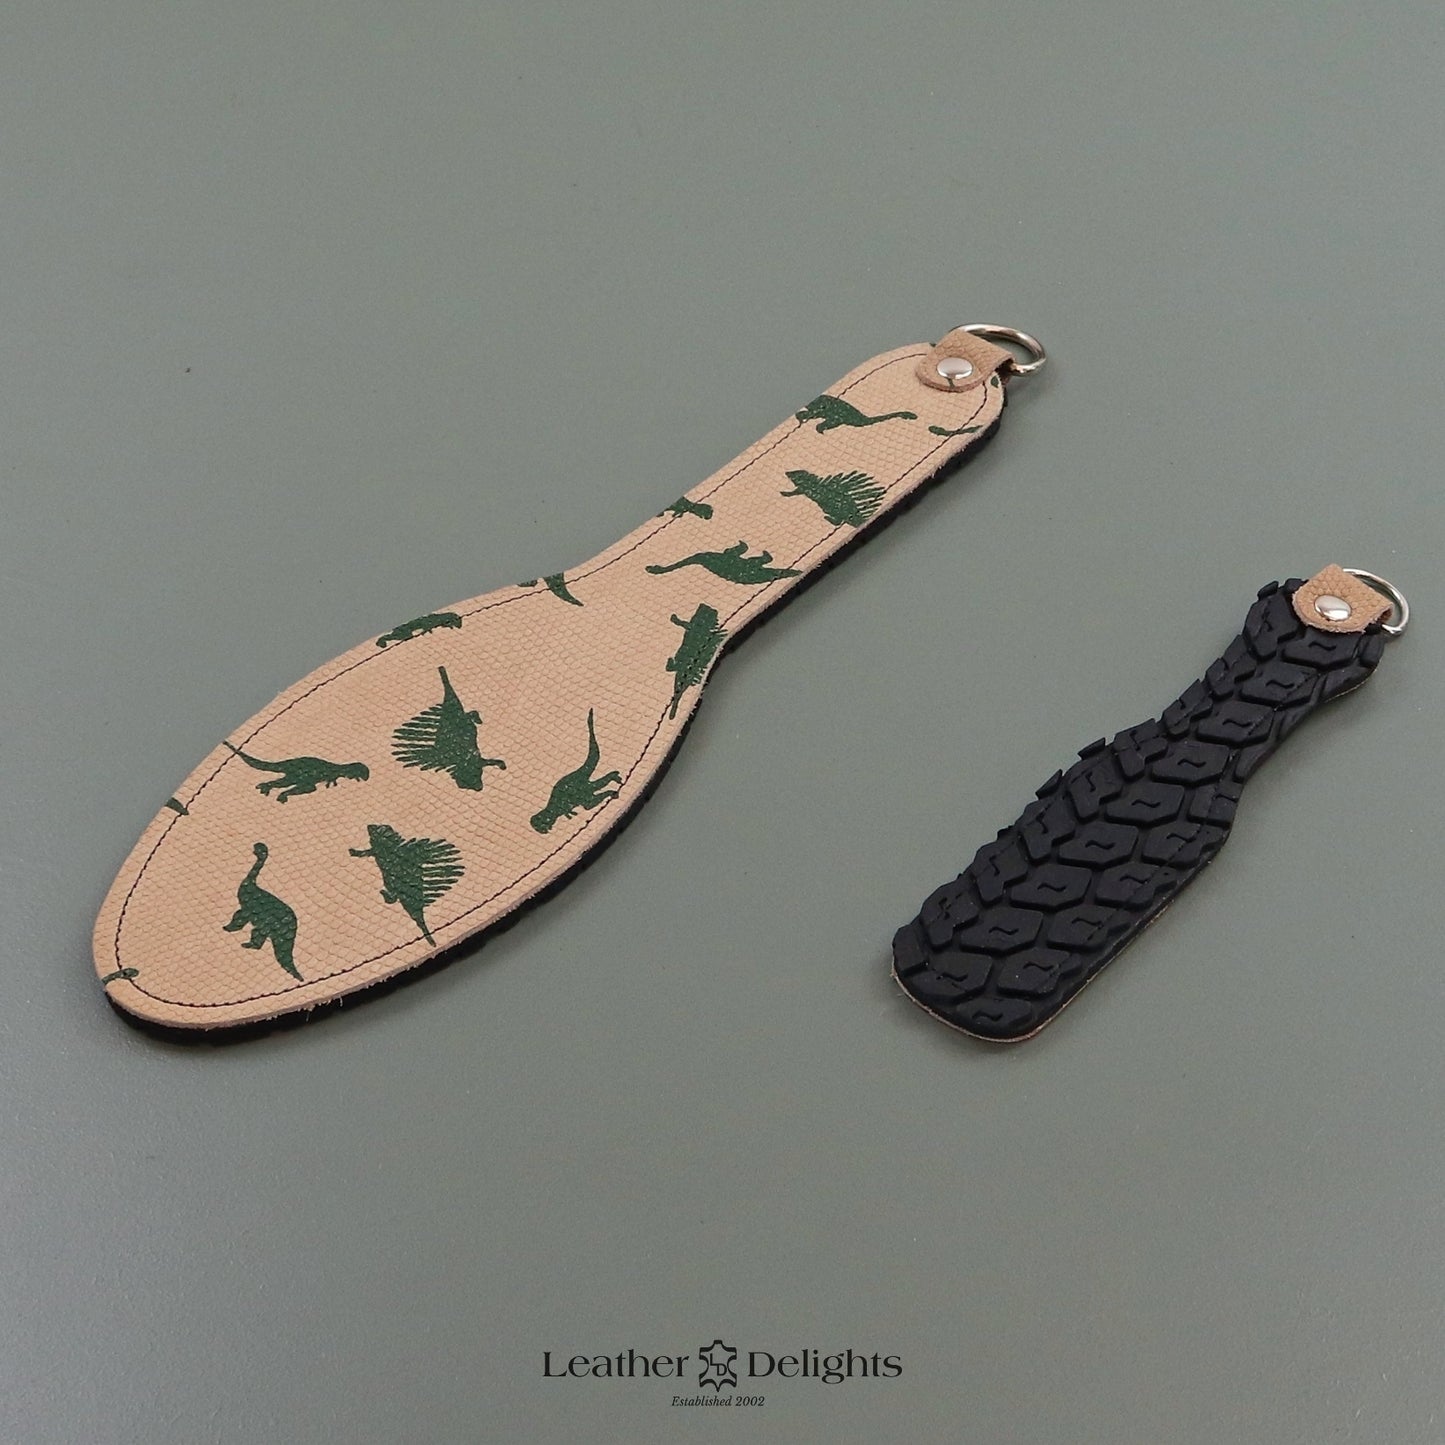 Shoe Sole - Dinosaur Print Leather & Tyre Tread Rubber